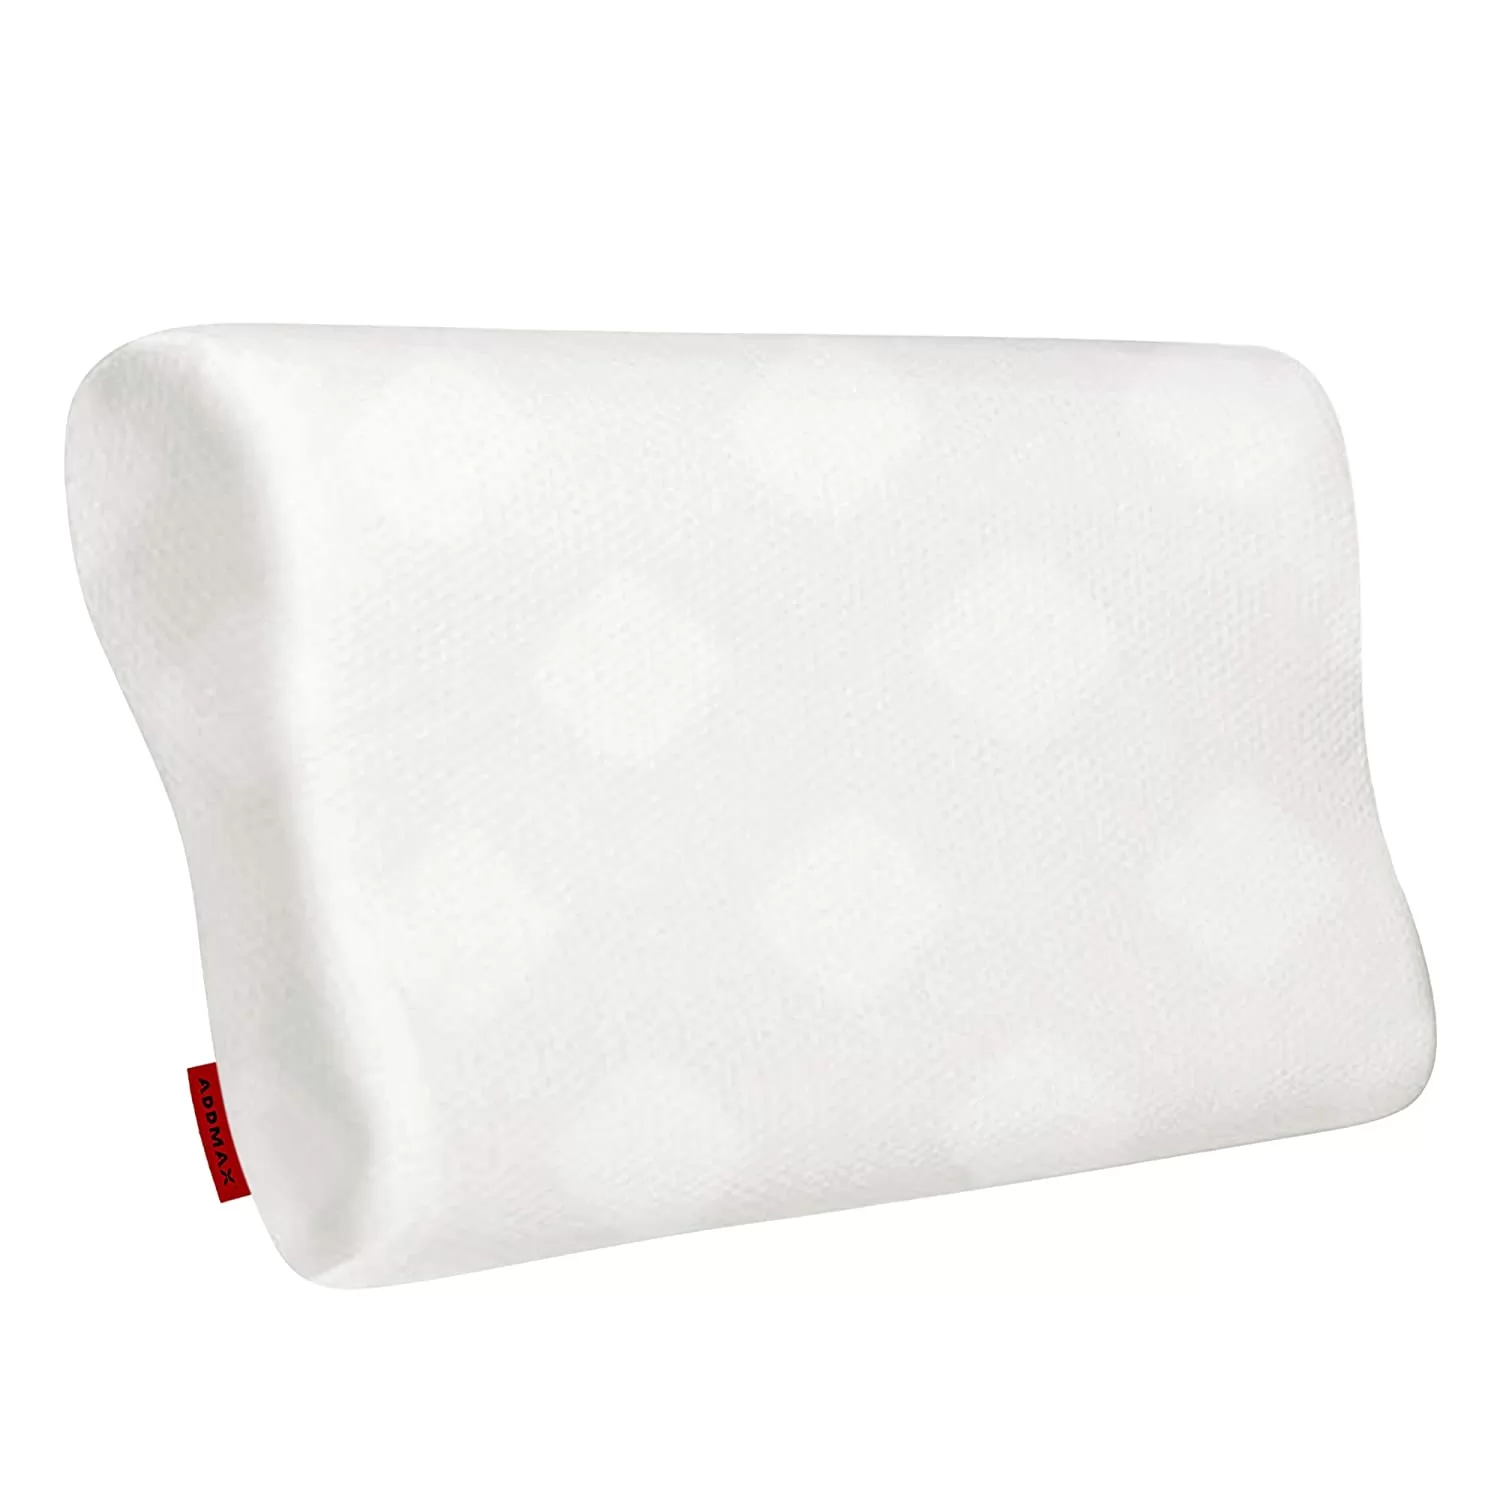 ADDMAX 100% Memory Foam Orthopaedic B-shaped Contour Cervical Pillow